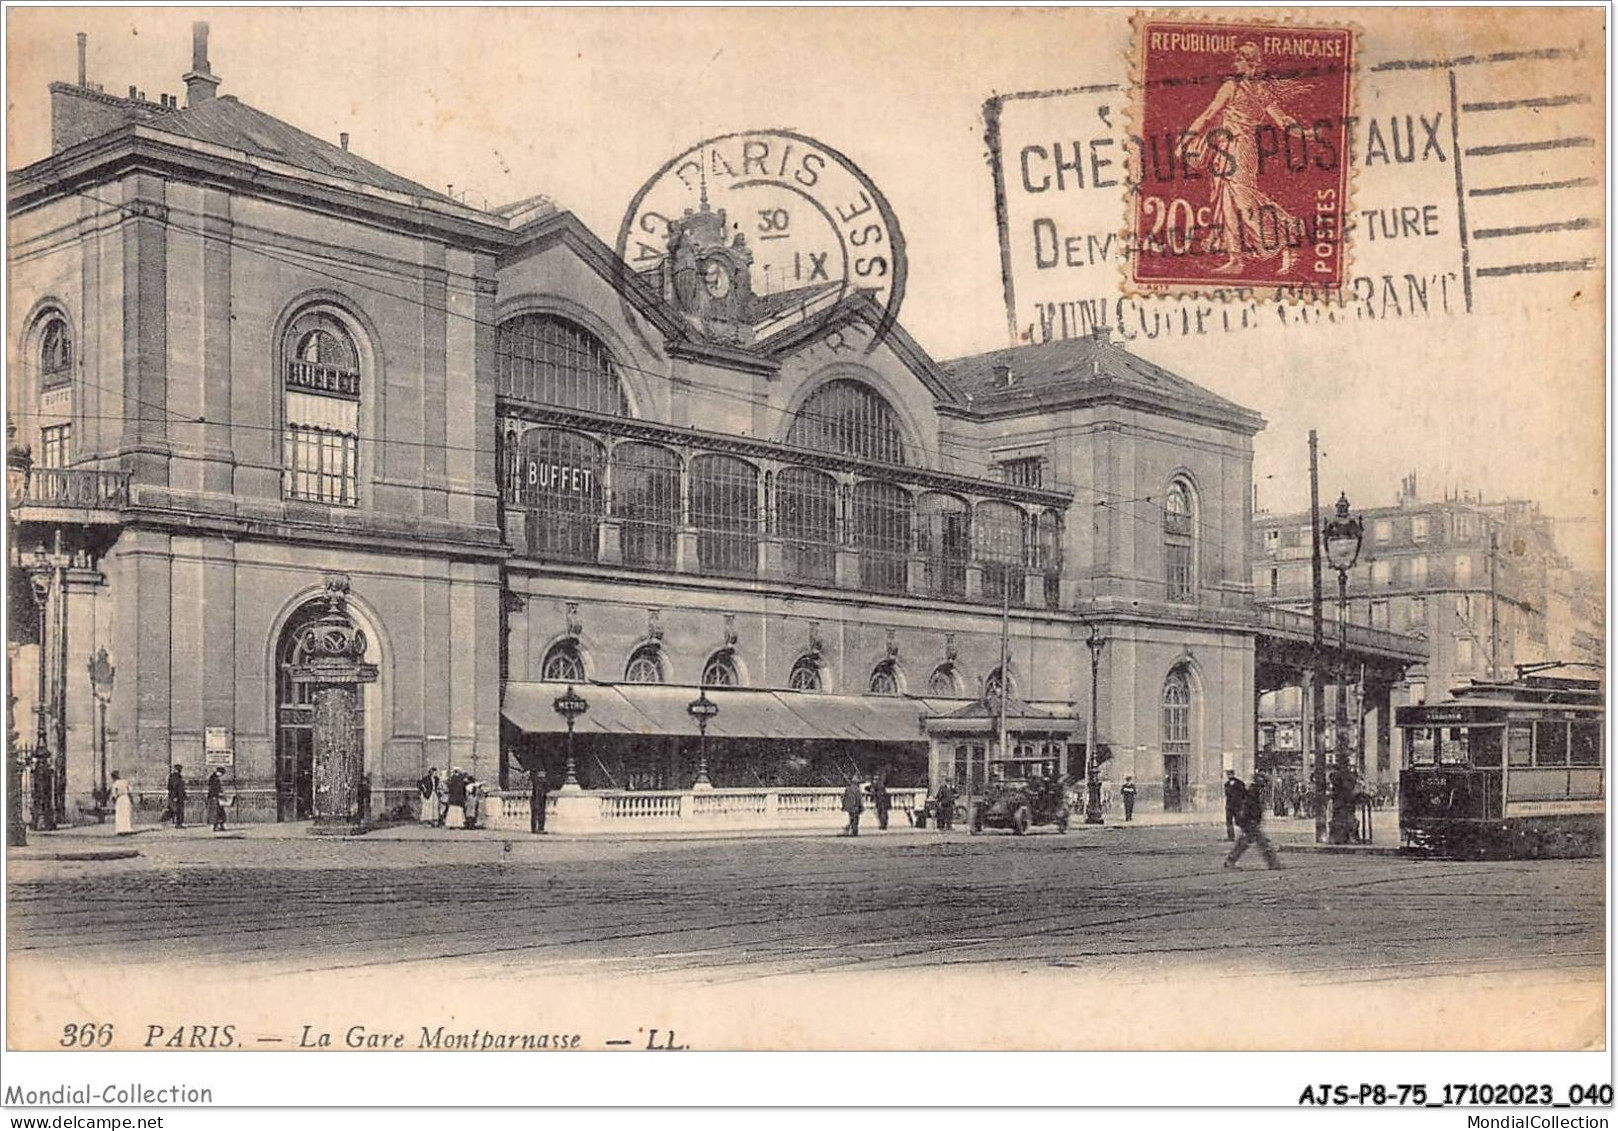 AJSP8-75-0730 - PARIS - La Gare Montparnasse - Stations, Underground